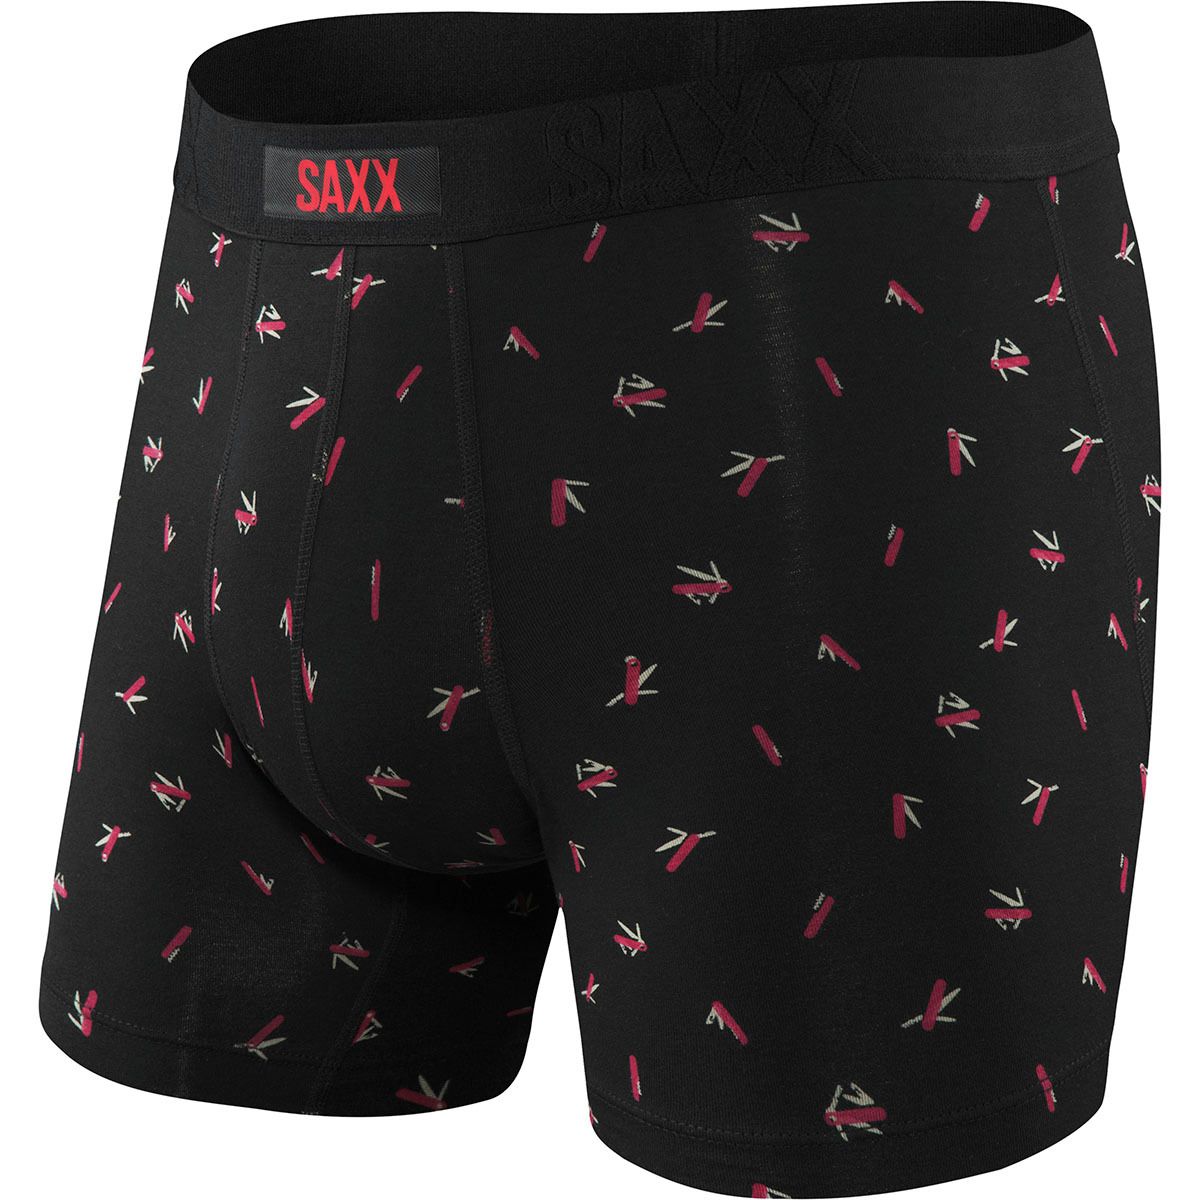 SAXX Undercover Boxer Brief - Men's - Clothing